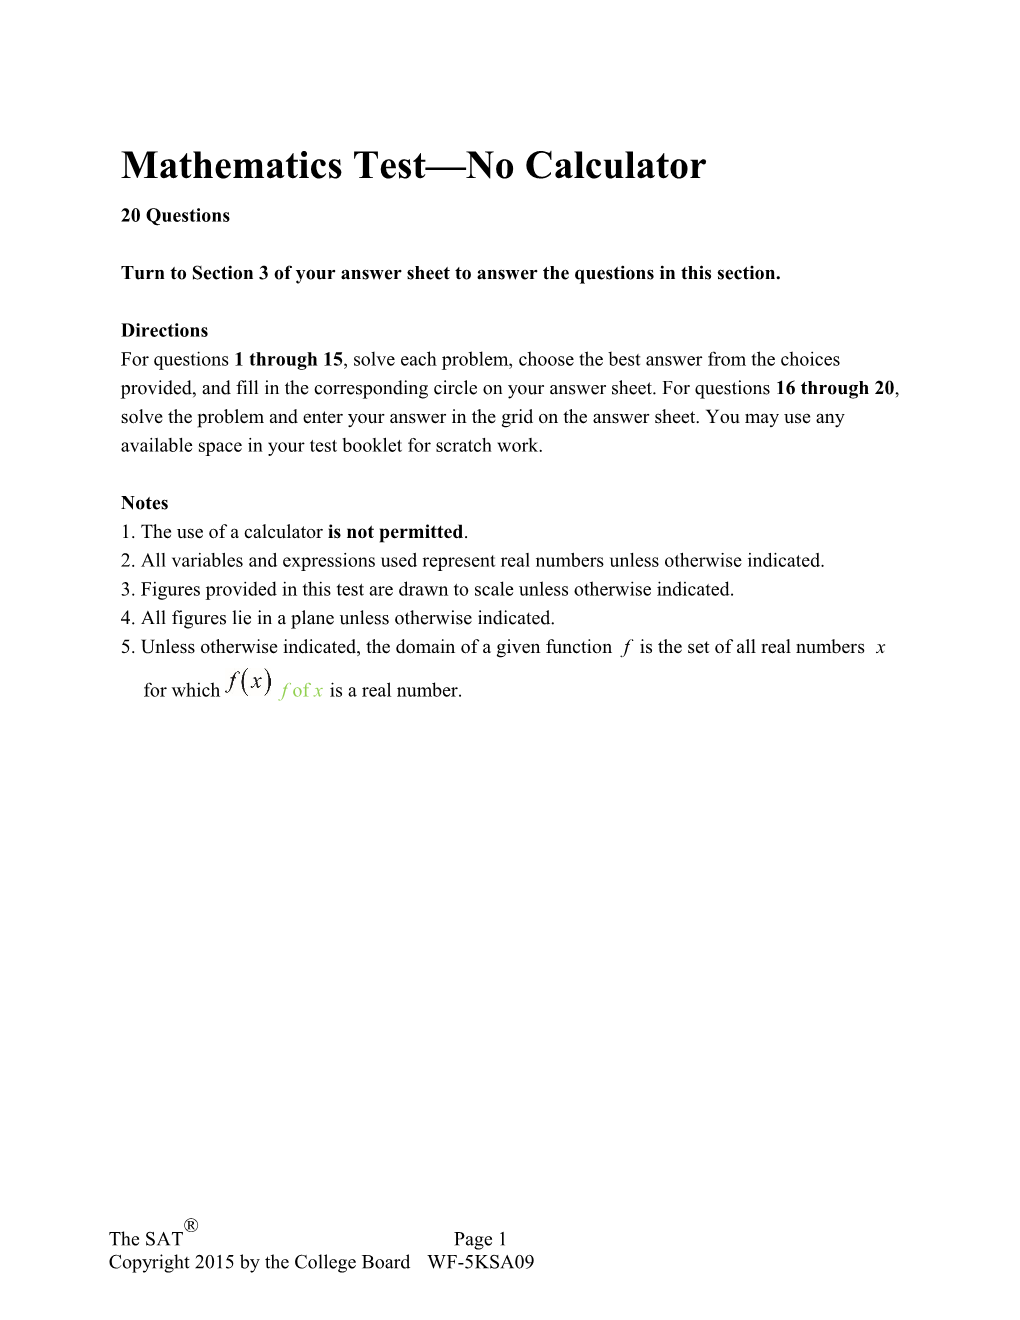 Mathematics Test No Calculator